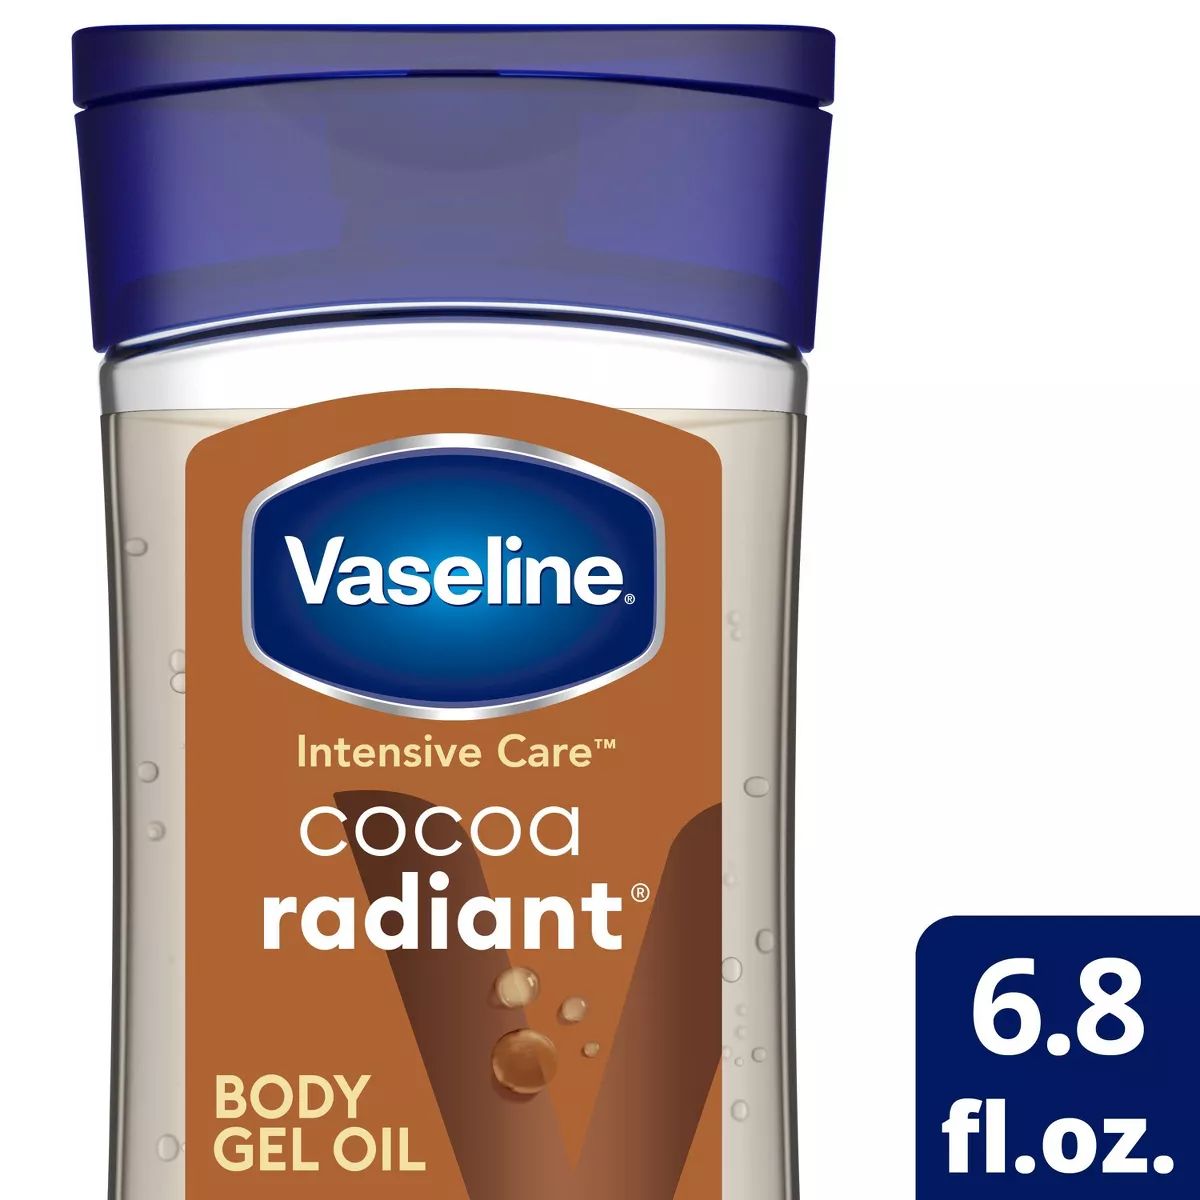 Vaseline Intensive Care Cocoa Radiant Body Gel Oil Scented - 6.8 fl oz | Target